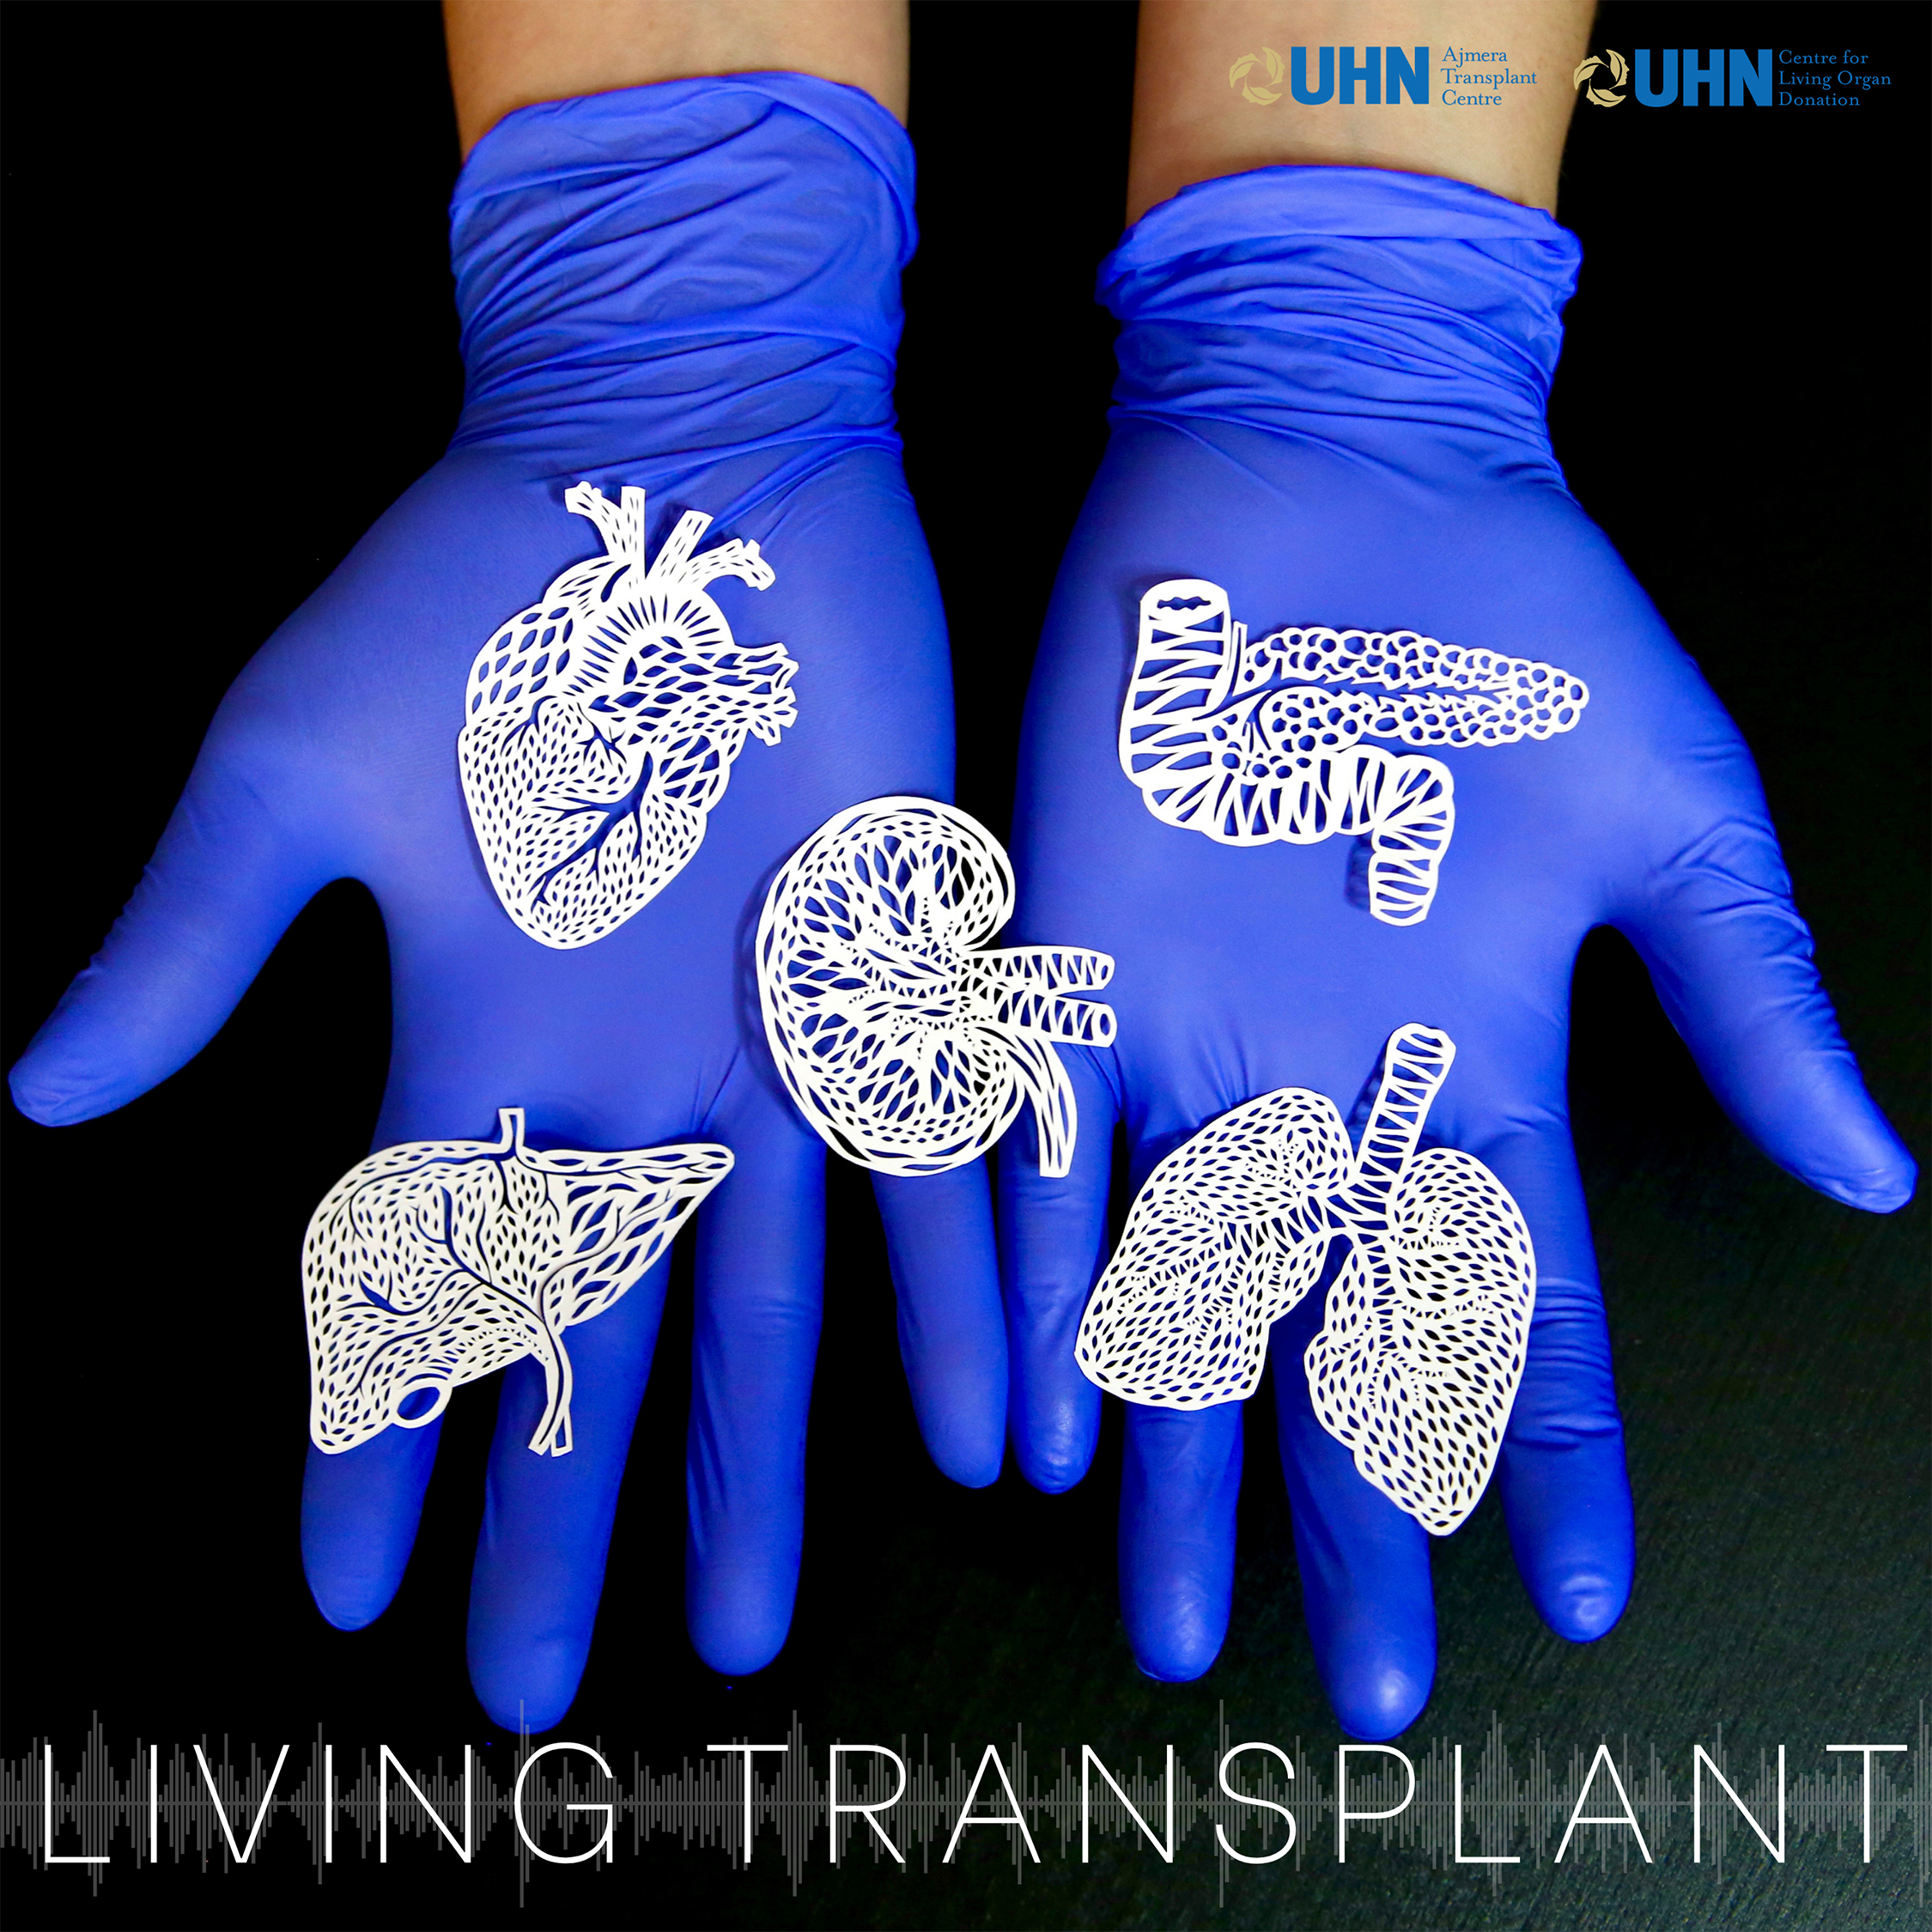 Living Transplant podcast cover